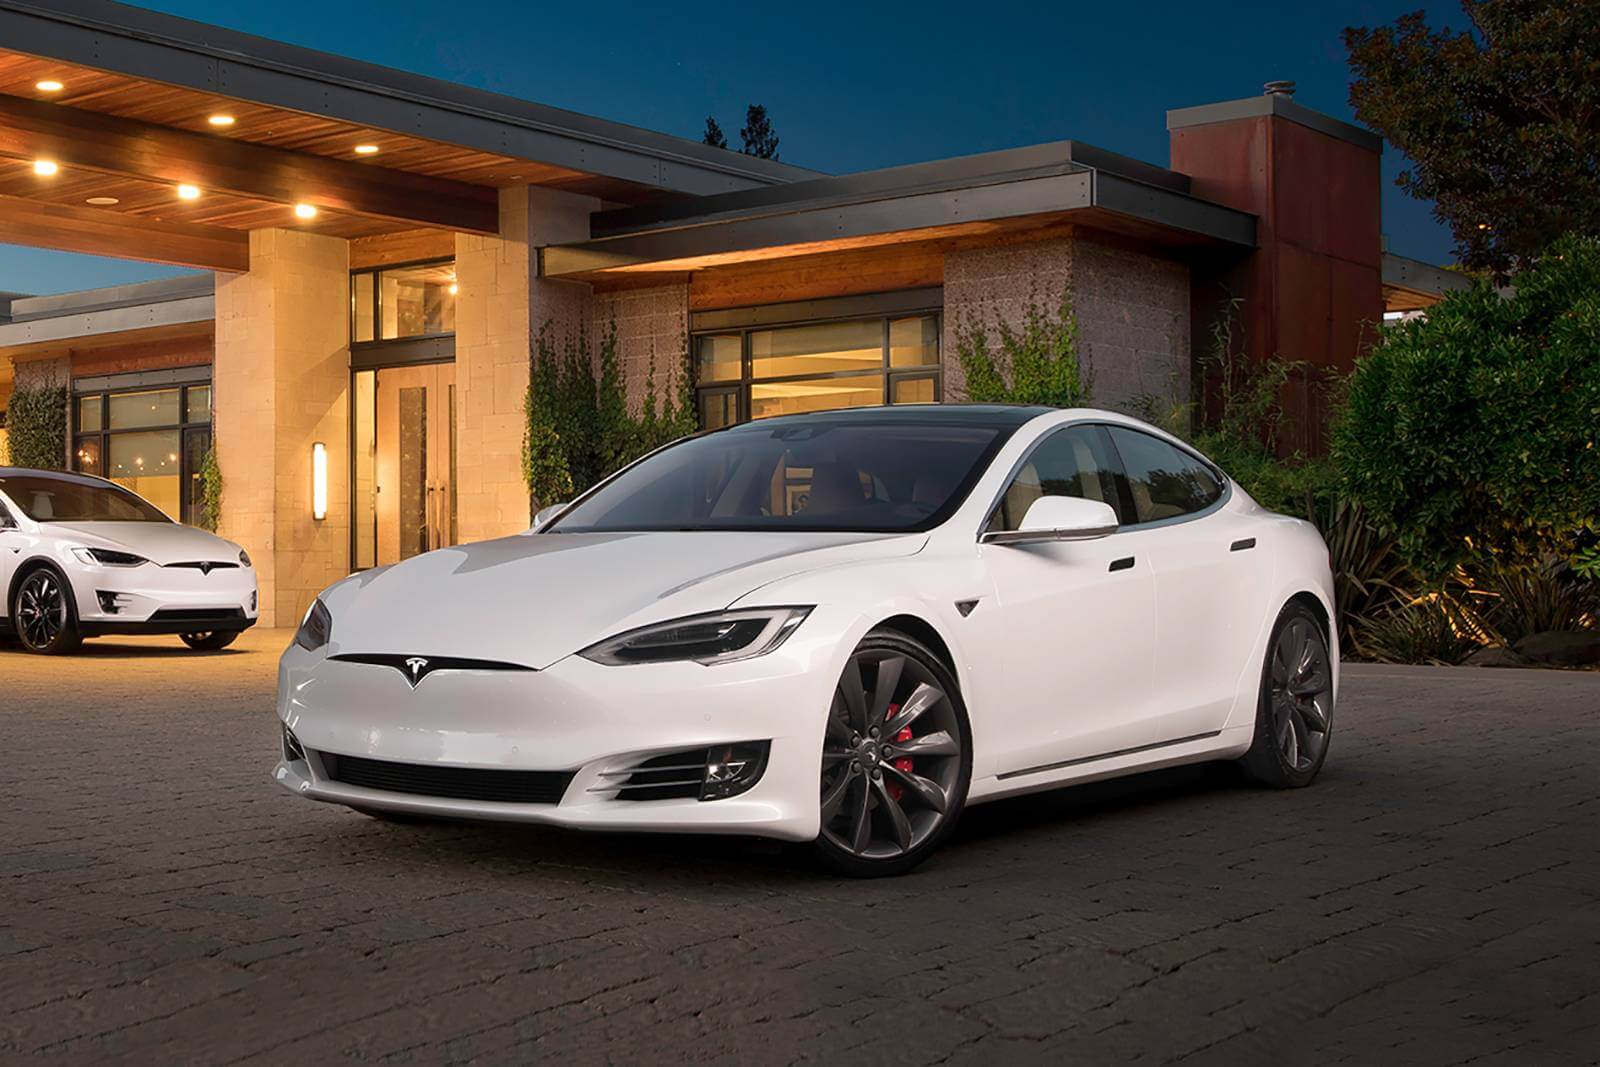 Tesla Hit $3.3 Billion Profit in the 1st Quarter of 2022